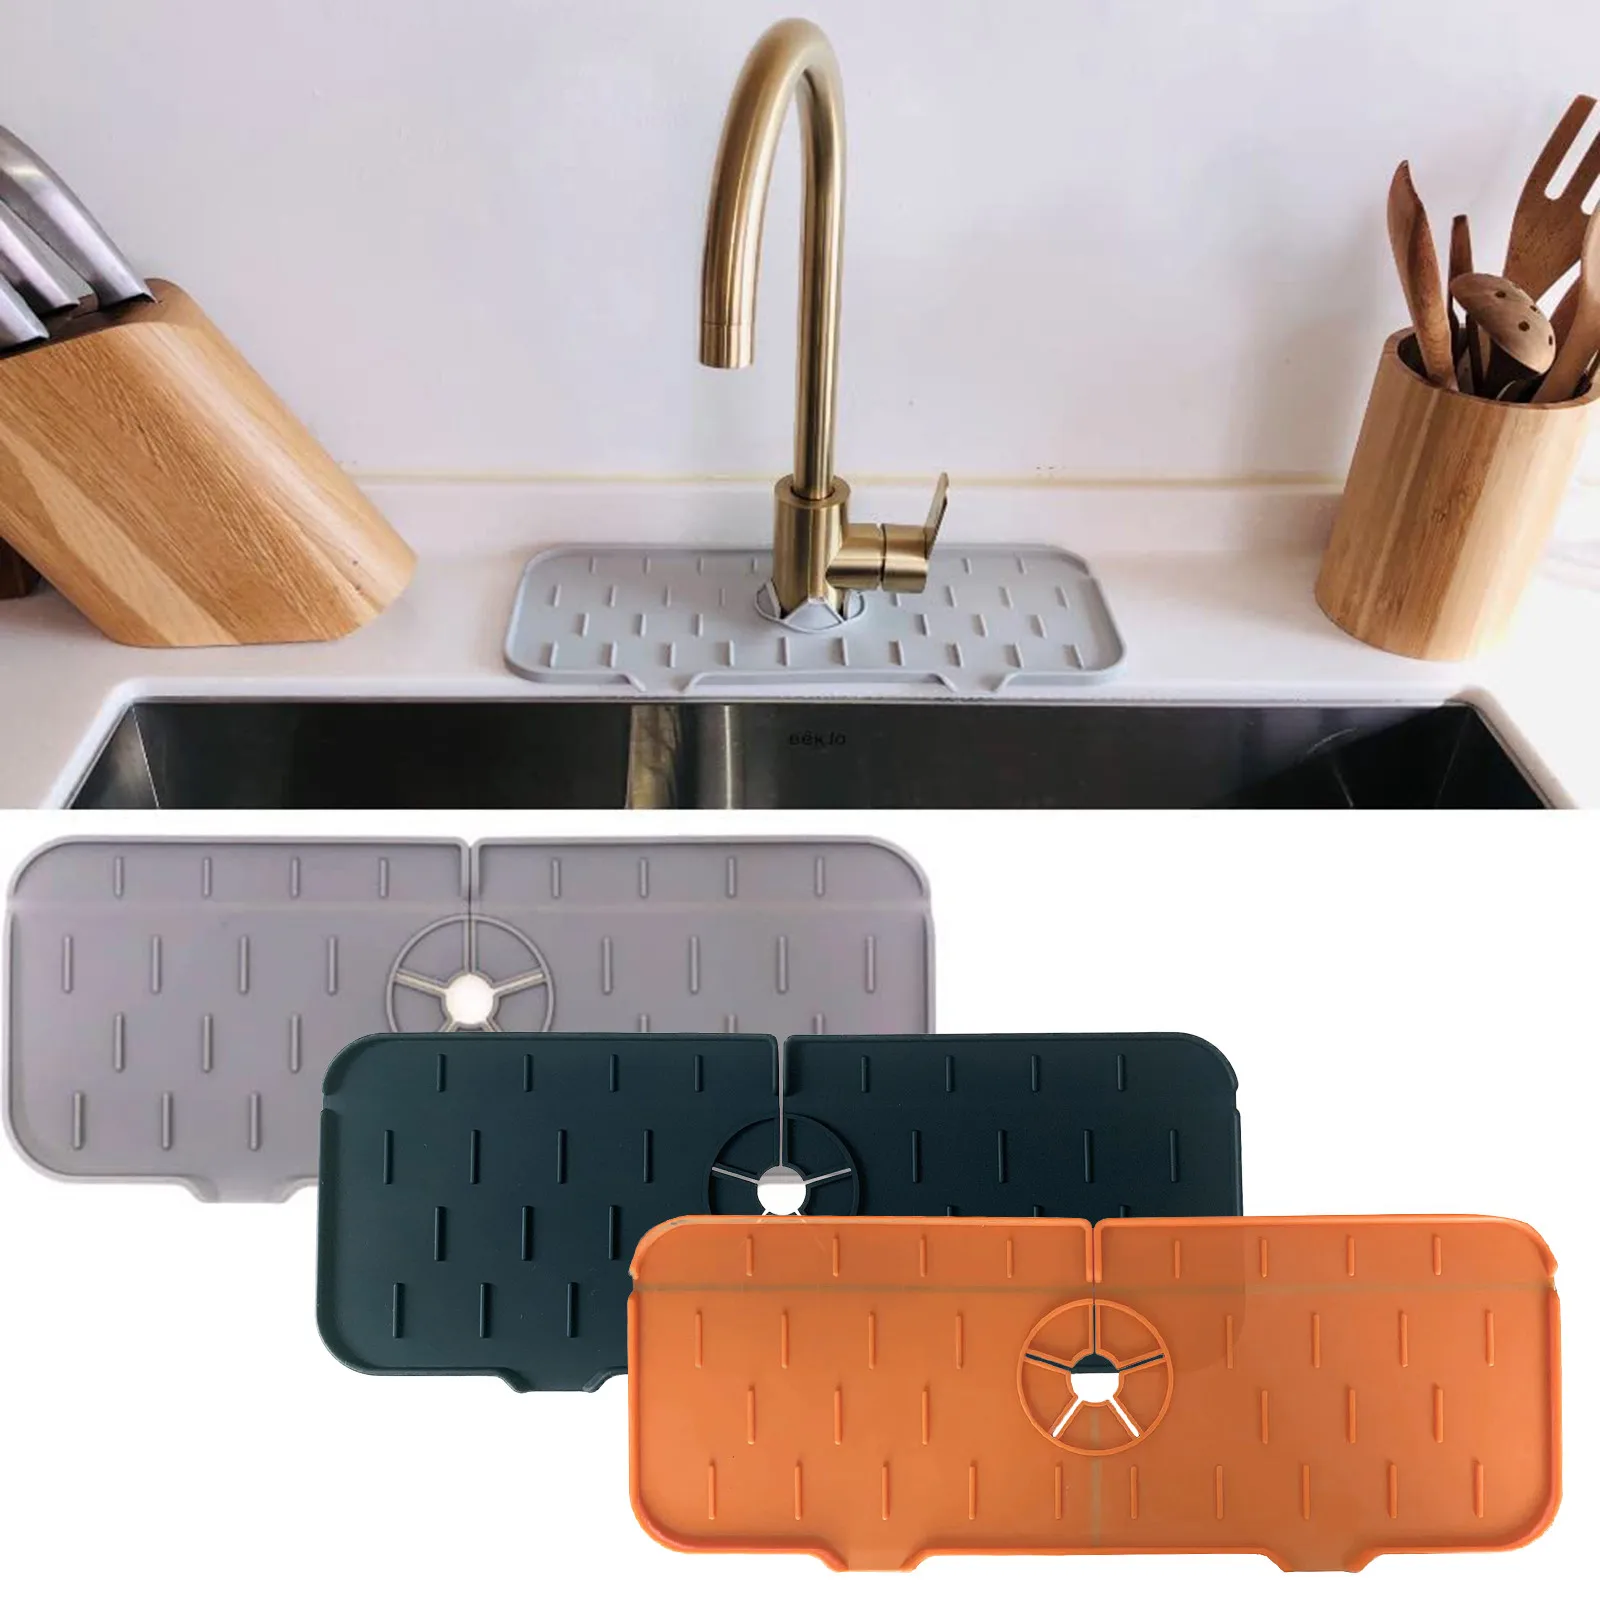 

2 Pcs Foldable Silicone Kitchen Faucet Sink Splash Guard Water Catcher Mat Sink Draining Pad Behind Faucet, Black, gray, orange